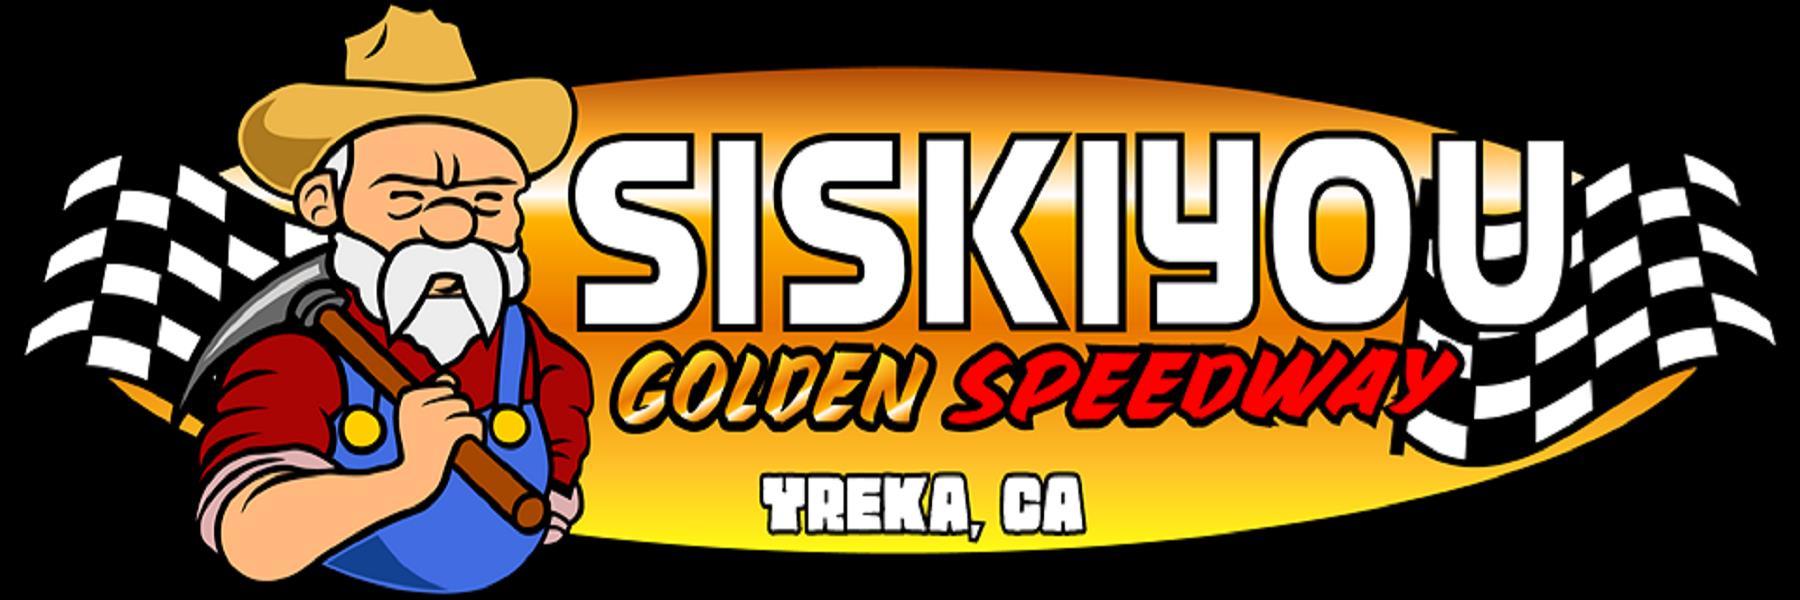 6/24/2022 - Siskiyou Golden Speedway